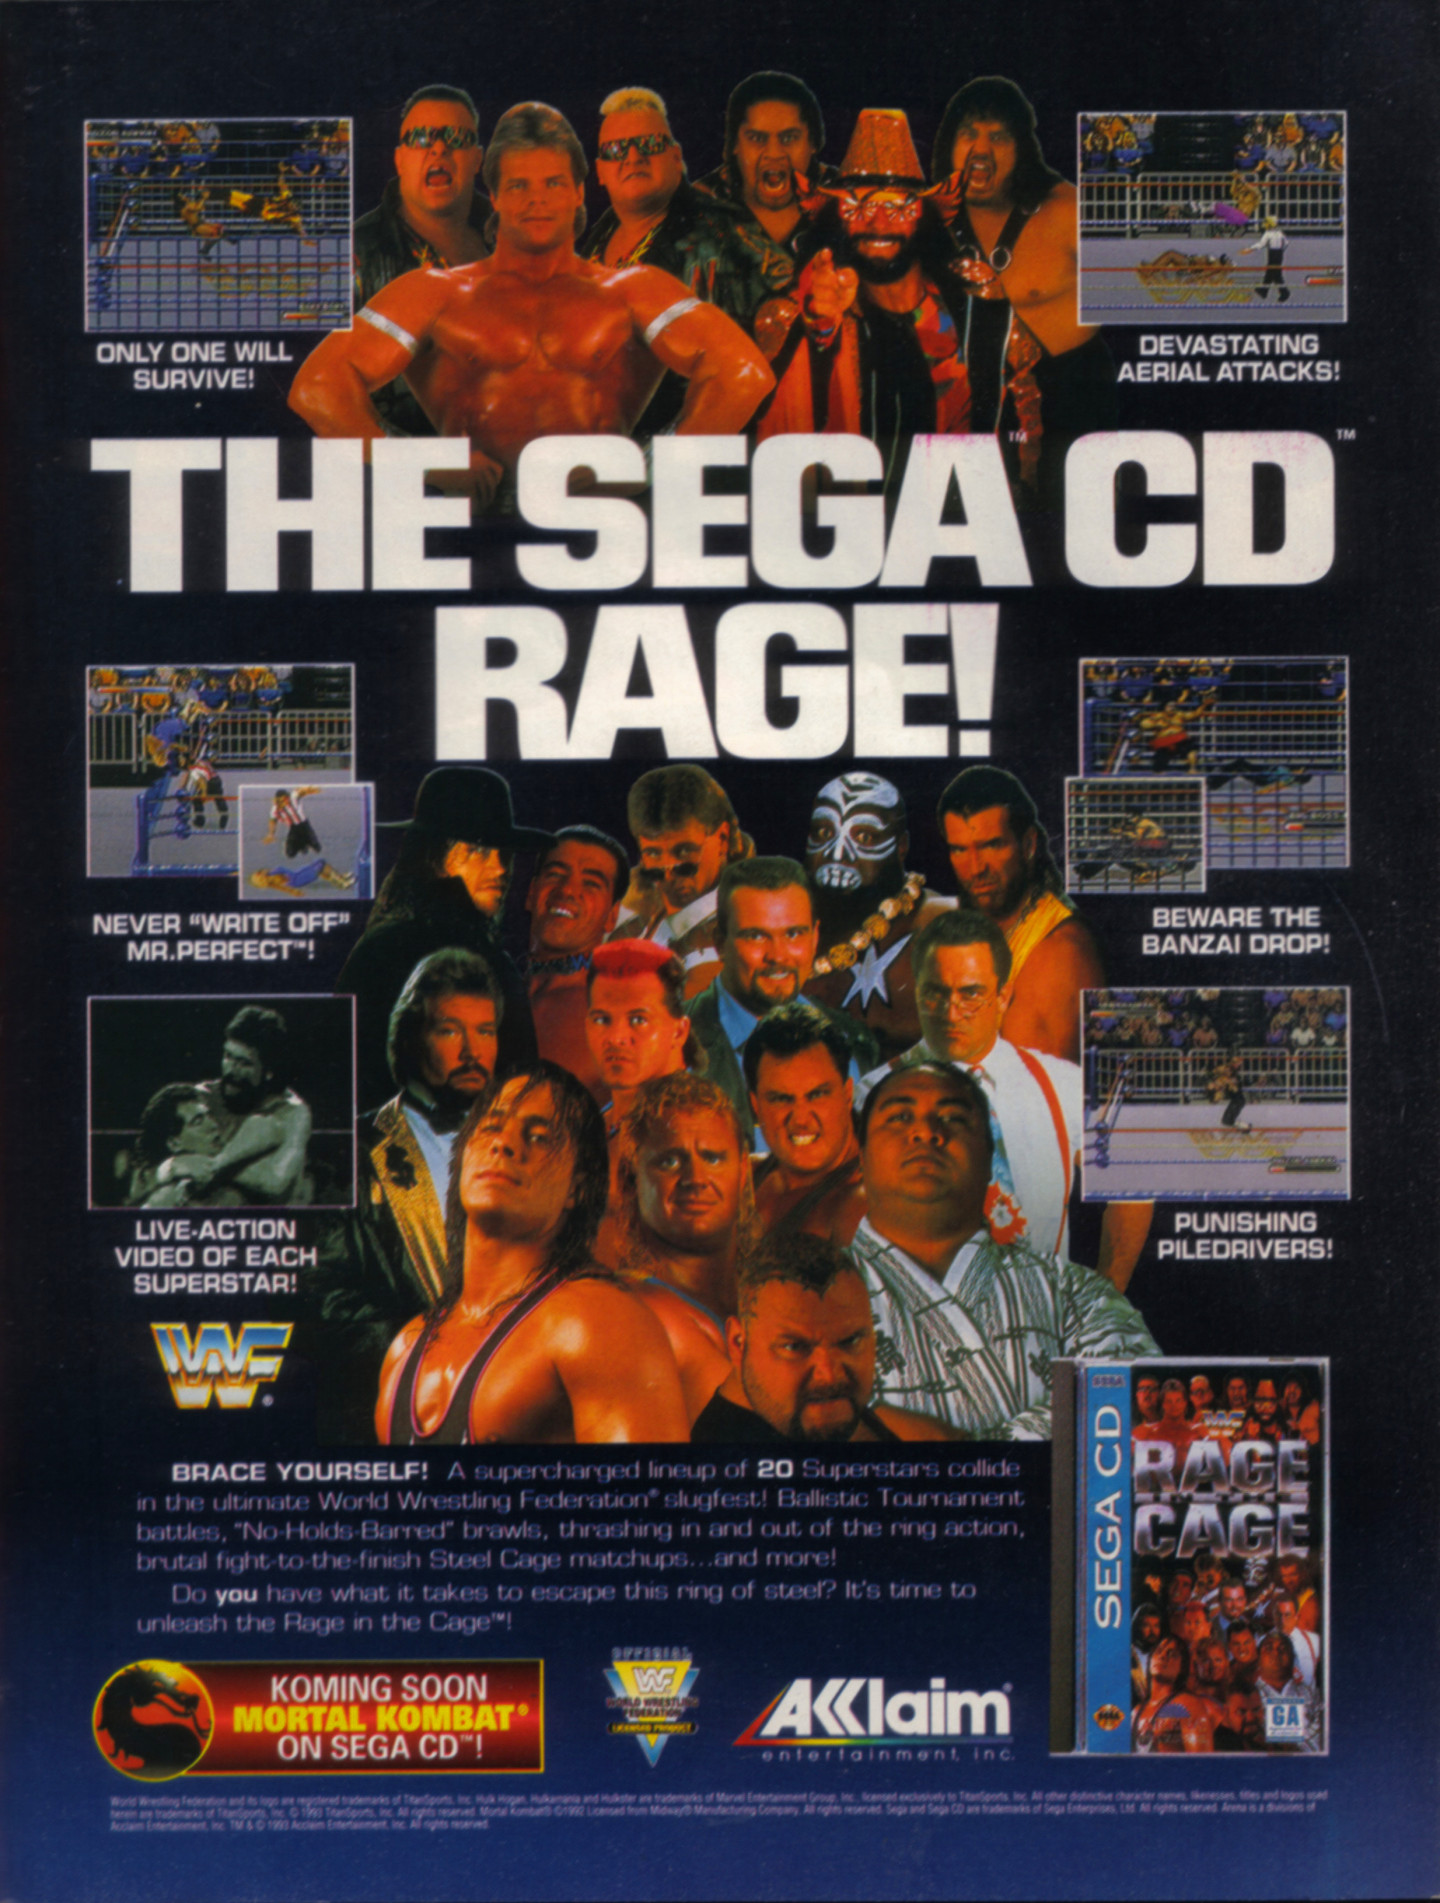 WWF Rage In The Cage Ssega CD ad